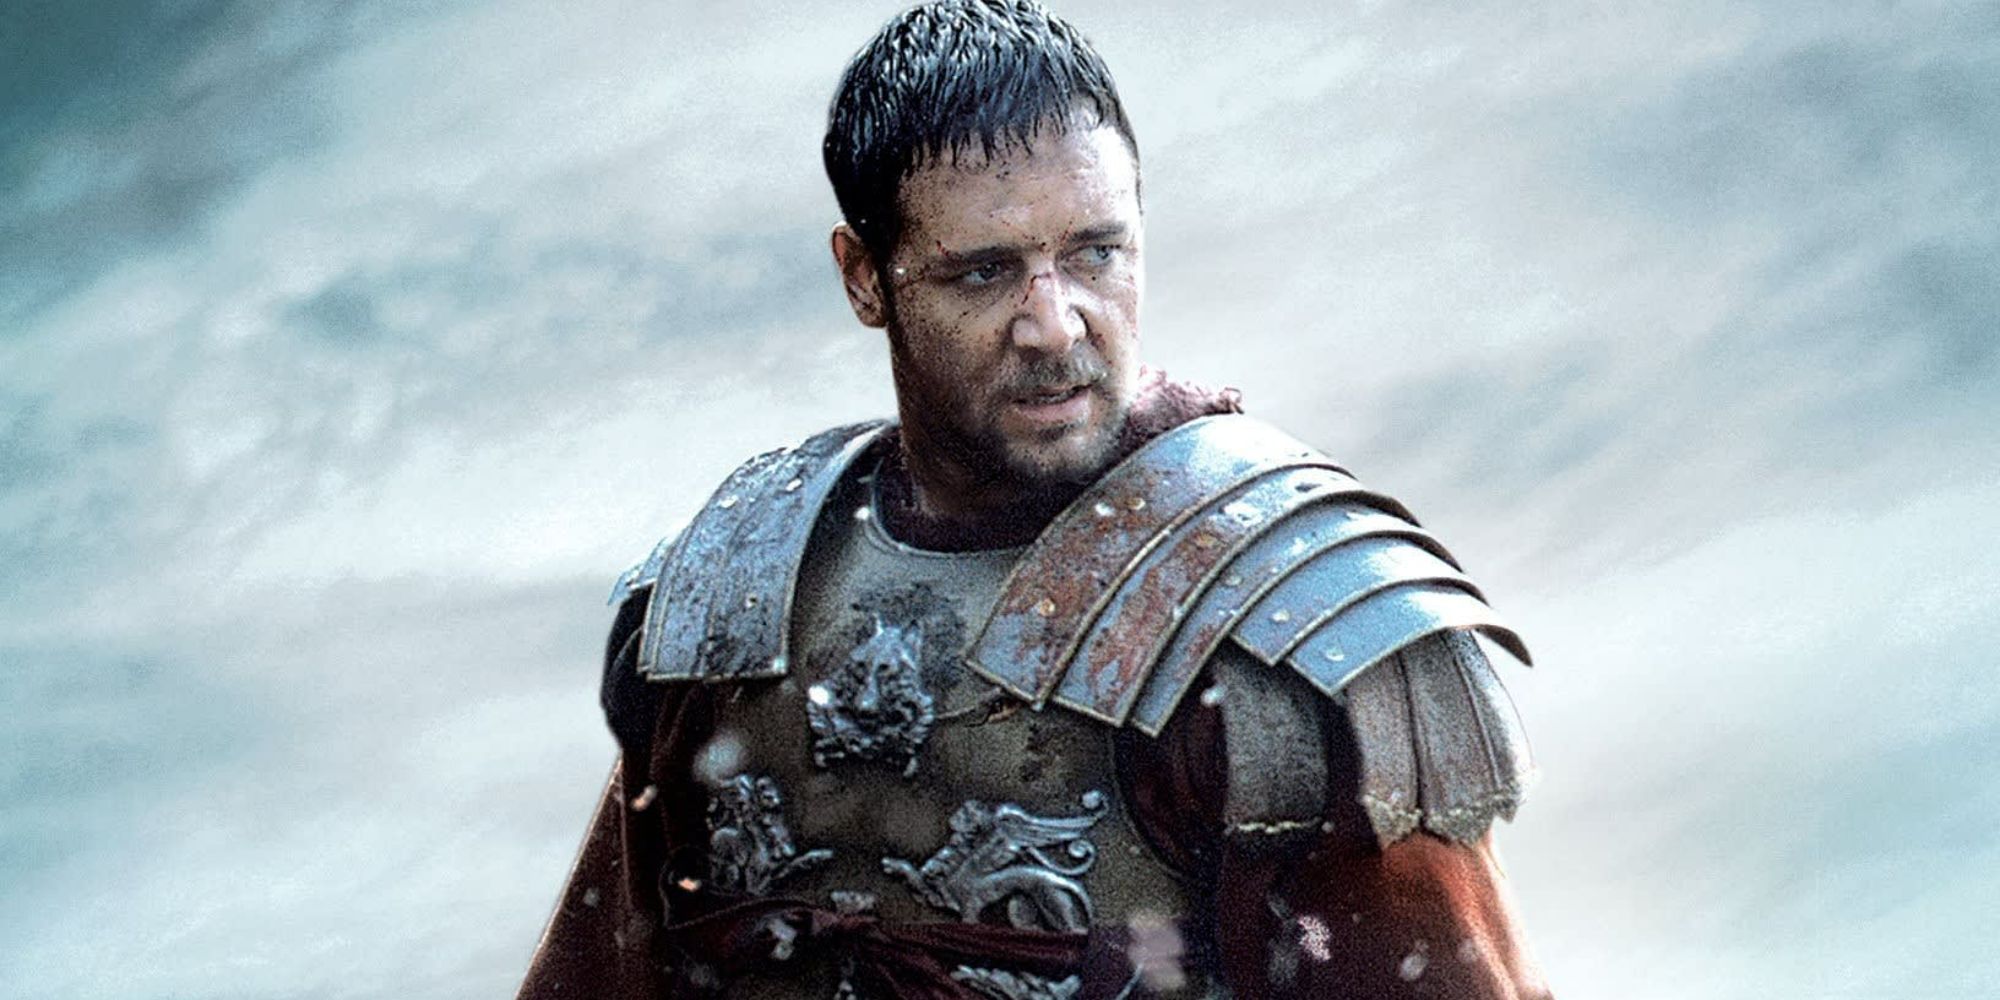 Maximus standing in battle in Gladiator